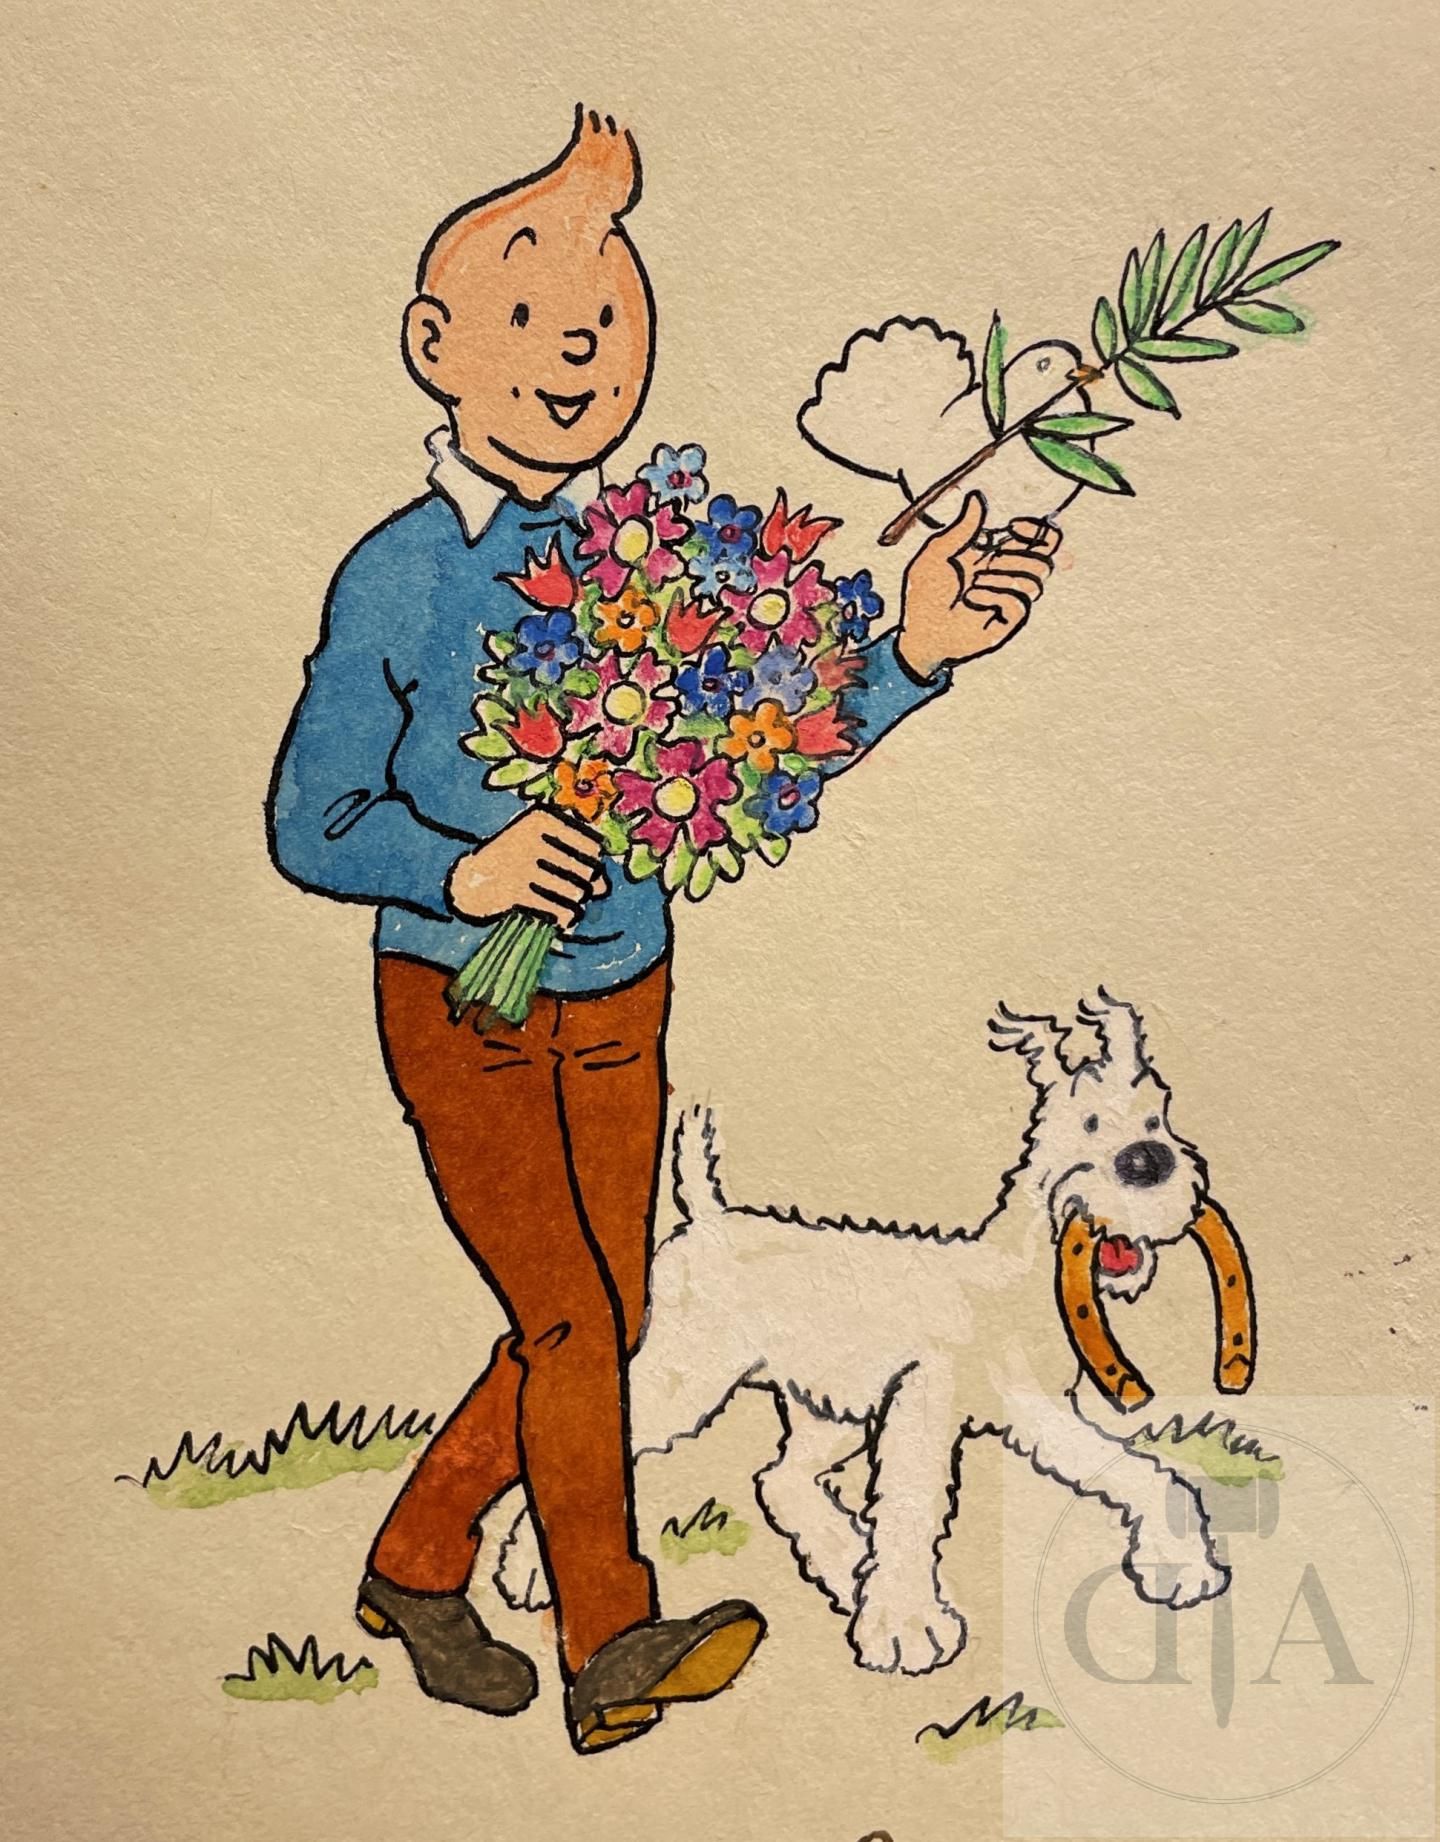 Hergé dessin original 
Hergé/Tintin. Original signed drawing illustrating Tintin&hellip;